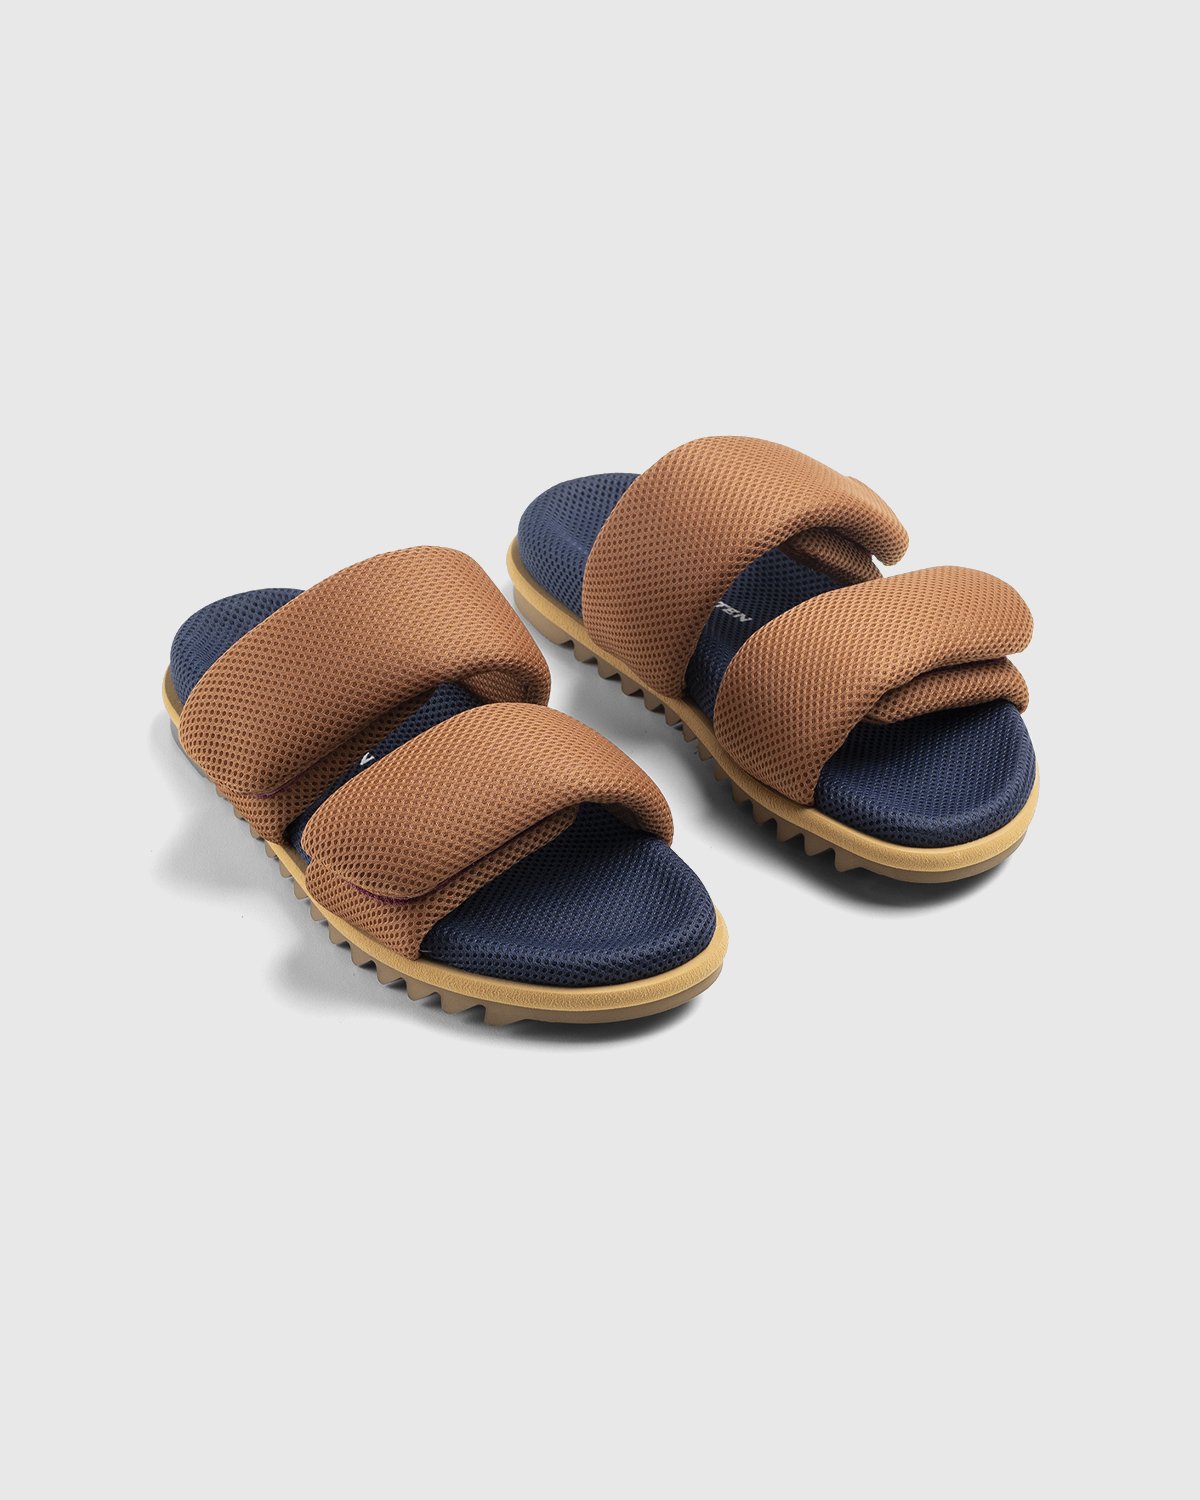 Dries van Noten - Double Strap Sandals Brown/Navy - Footwear - Brown - Image 3